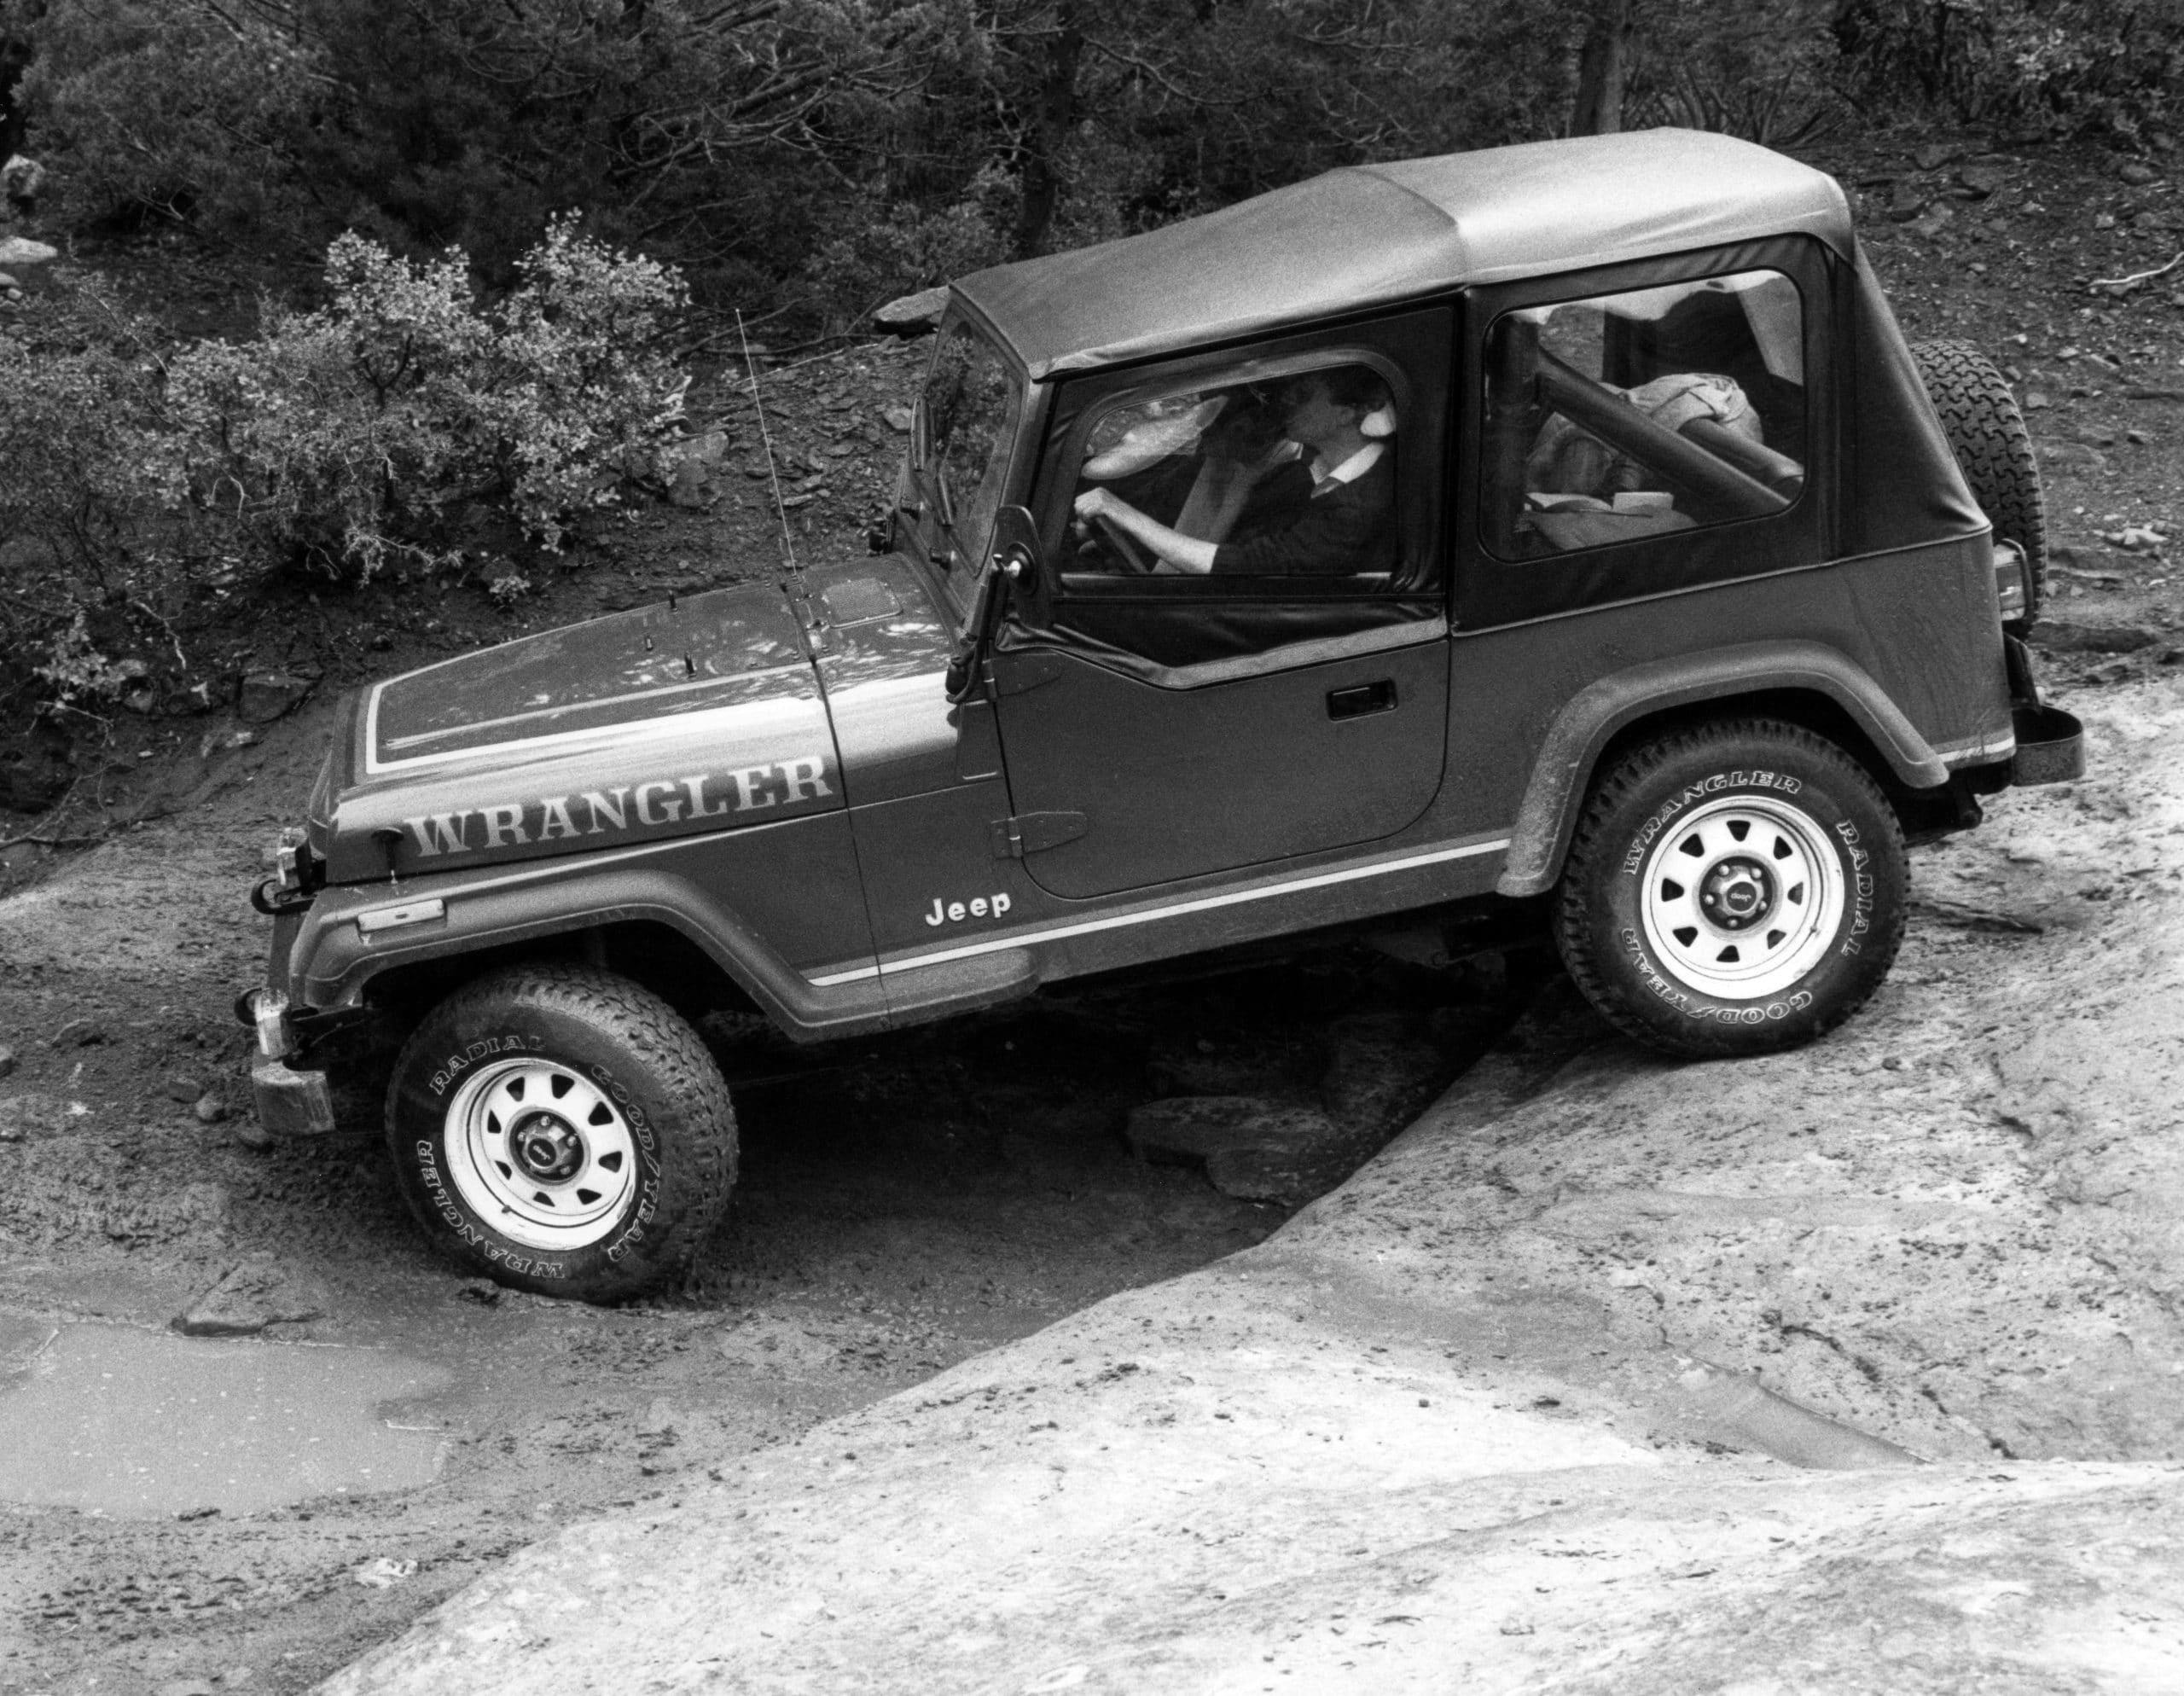 6th moment 1987 Jp Wrangler lft scaled 12 ορόσημα, για τα 80α γενέθλια της Jeep